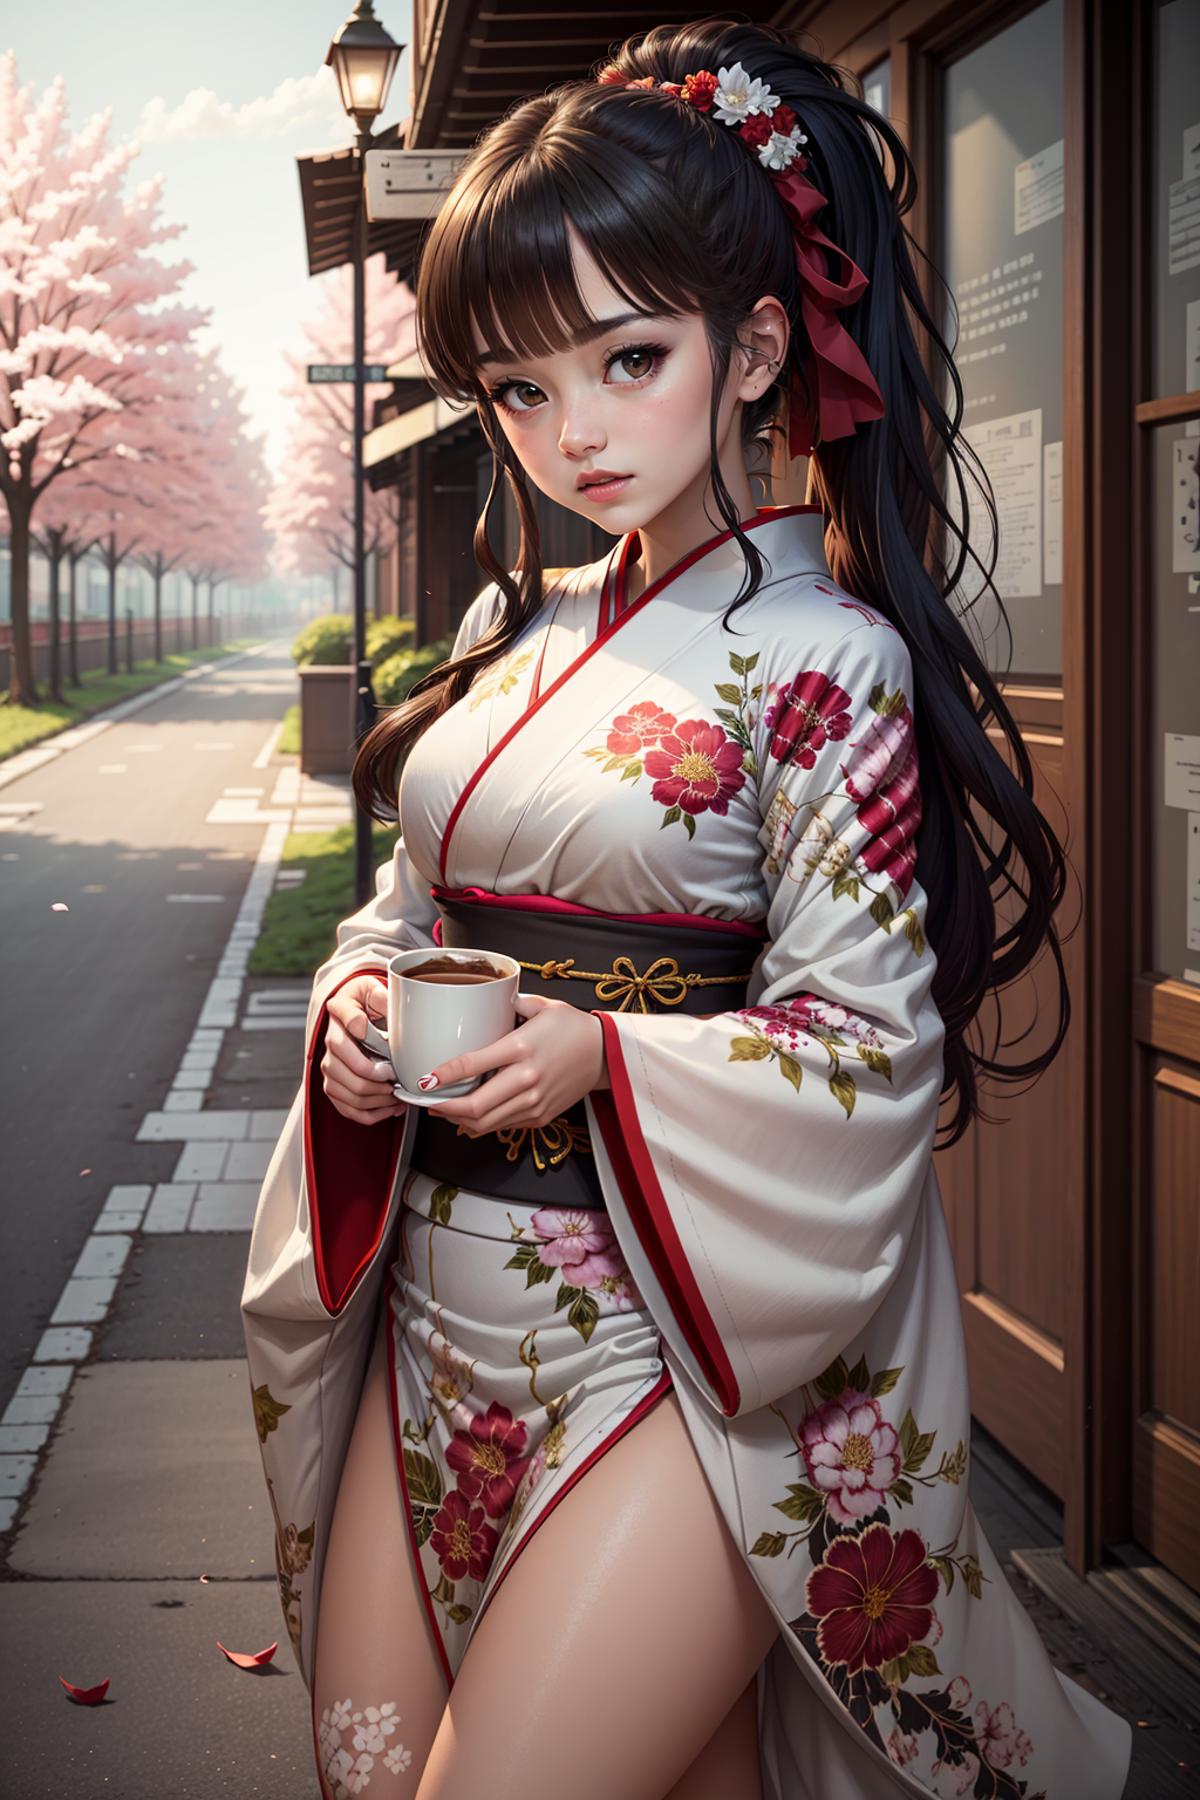 kimono_copax_v1 image by Copax